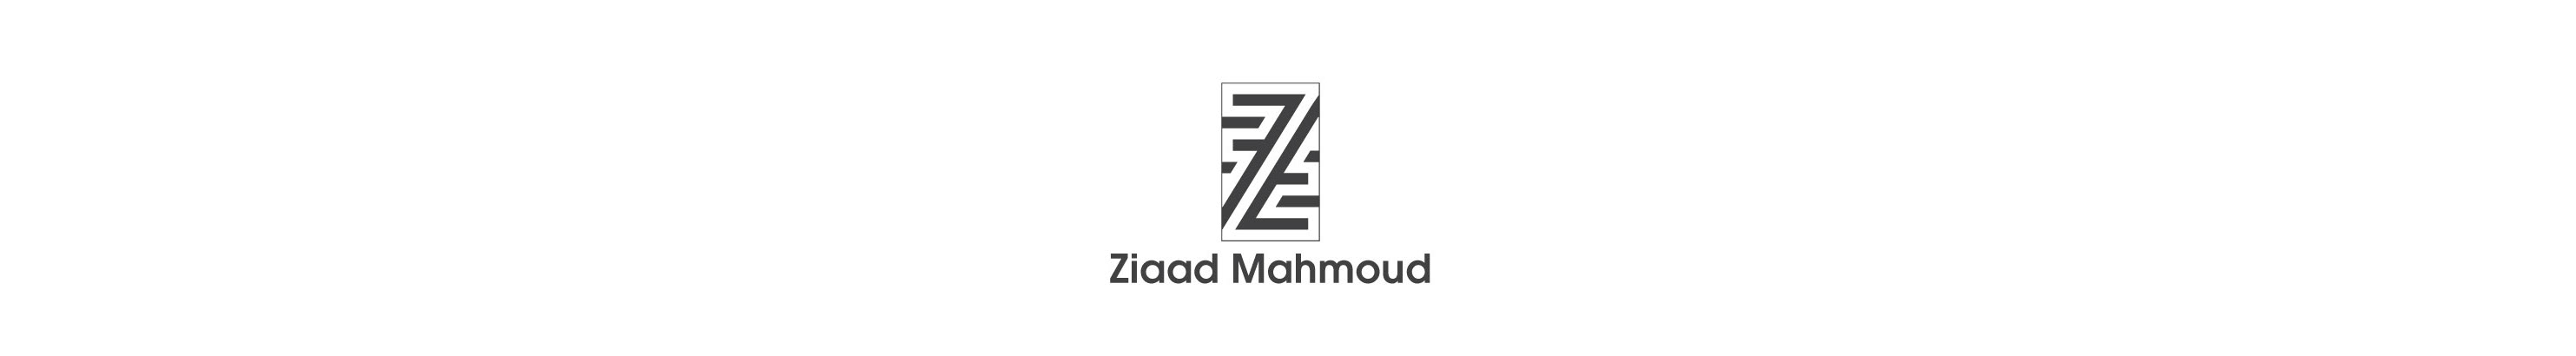 Baner profilu użytkownika Ziaad Mahmoud